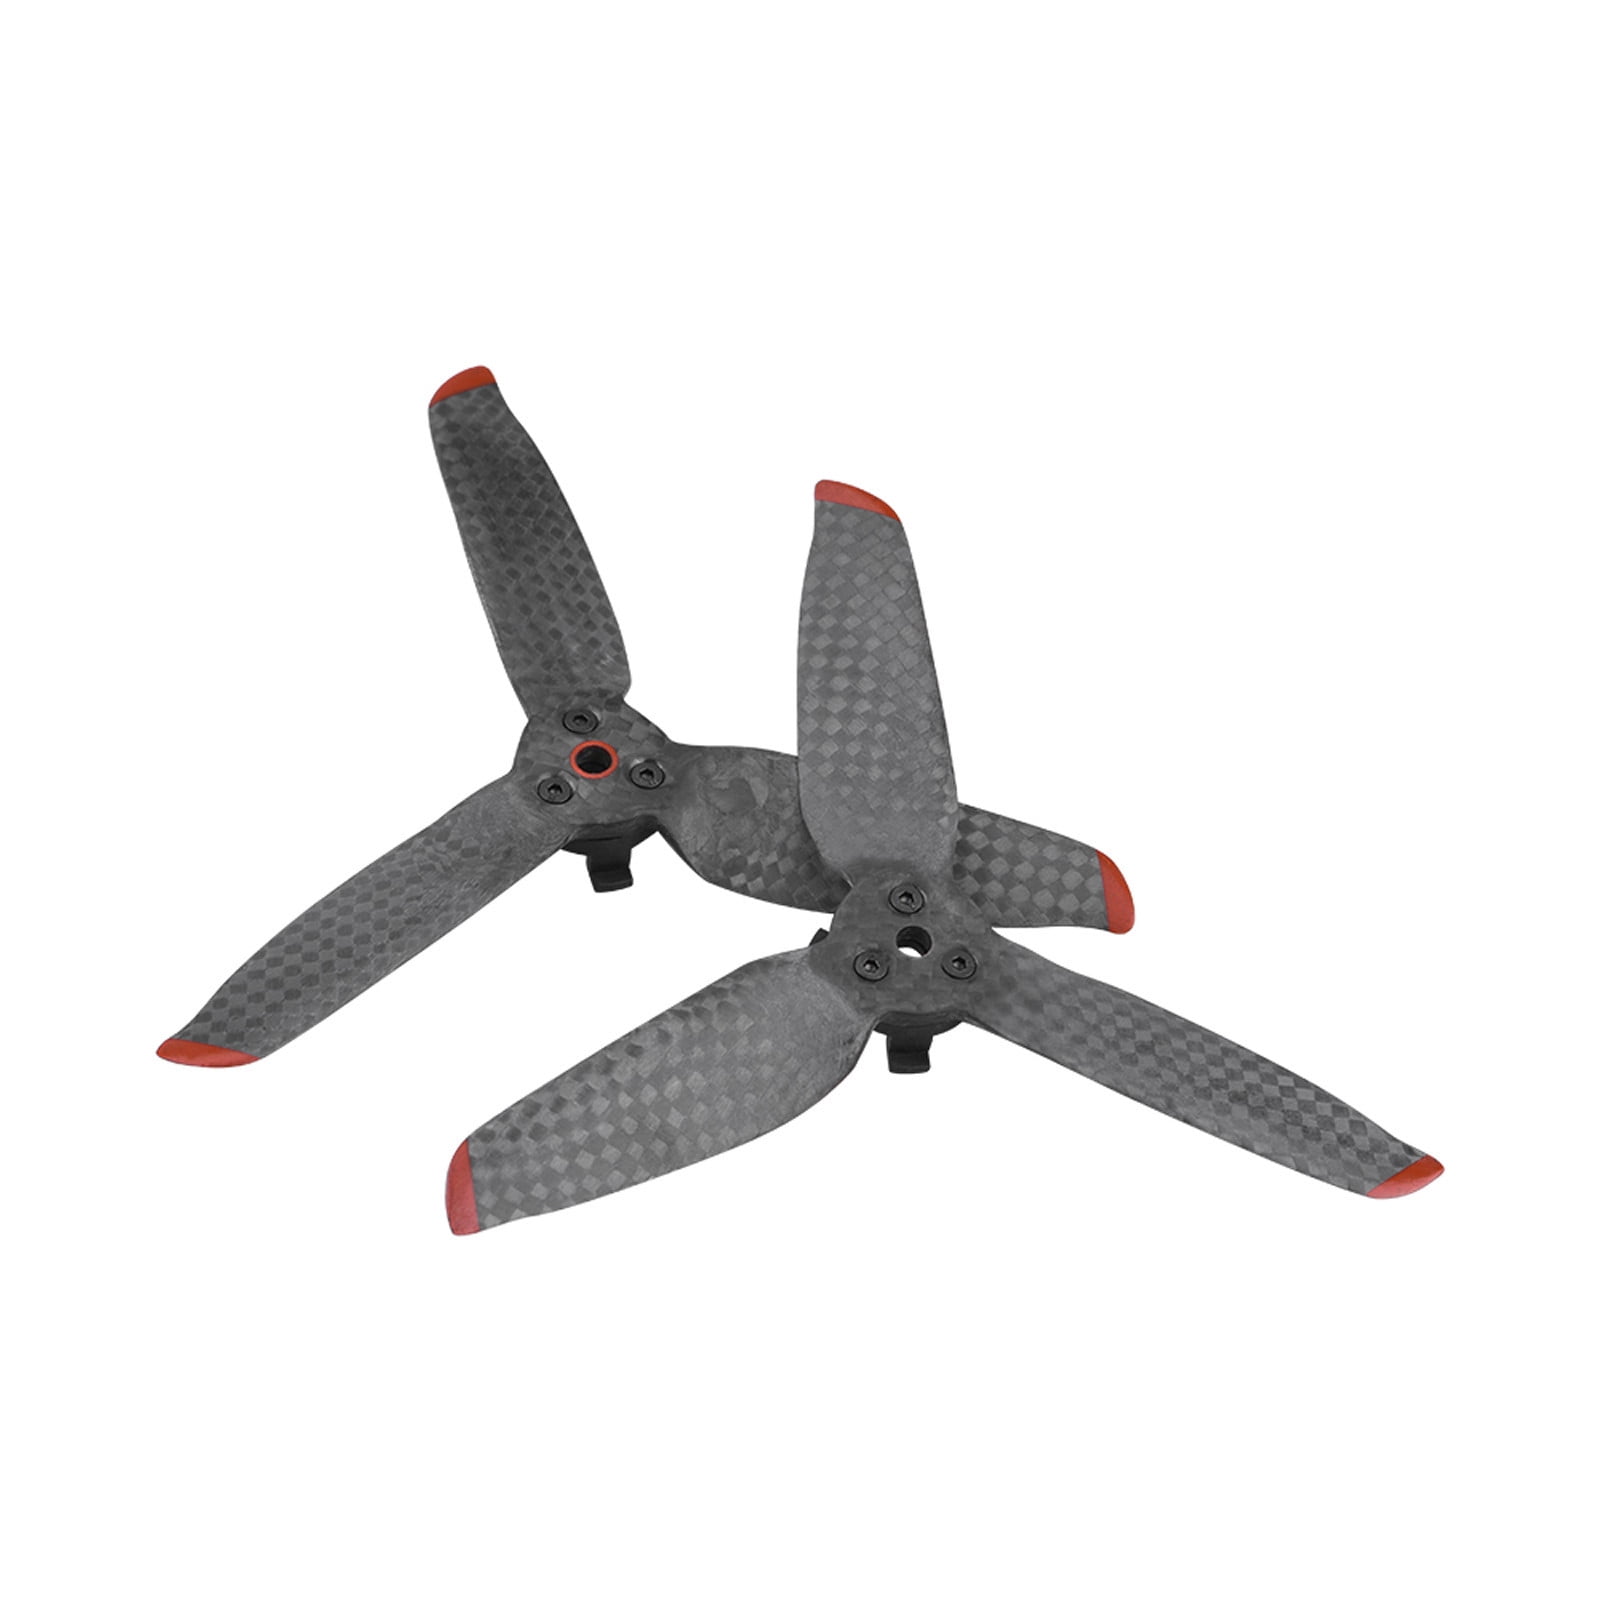 2 Pair Carbon Fiber Propeller Props for DJI Spark Drone Quadcopter Parts